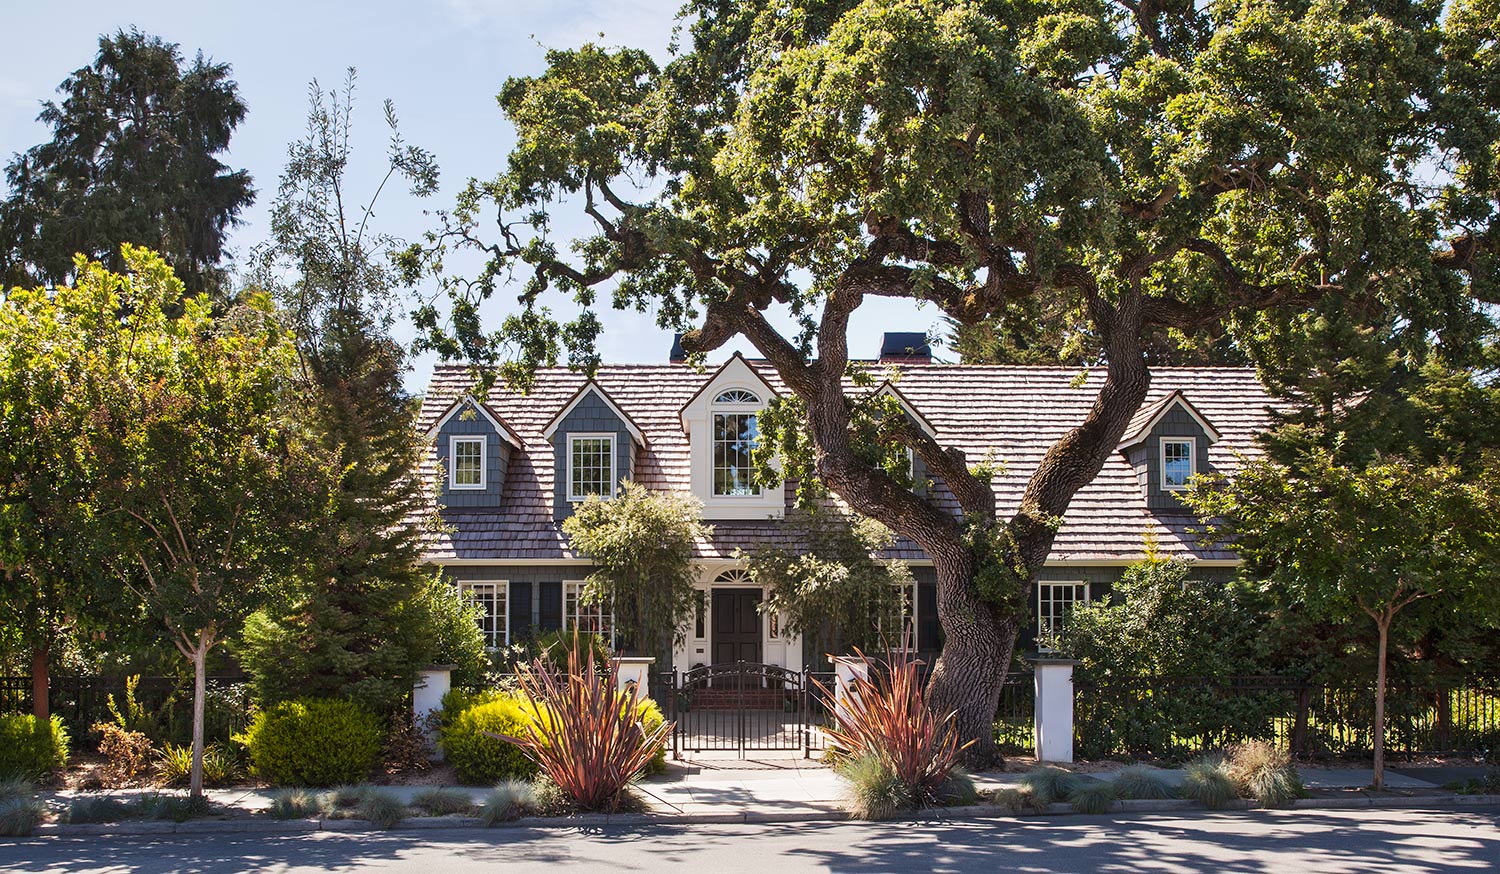   Bay Area Custom Homes | Andrew Morrall Architect  